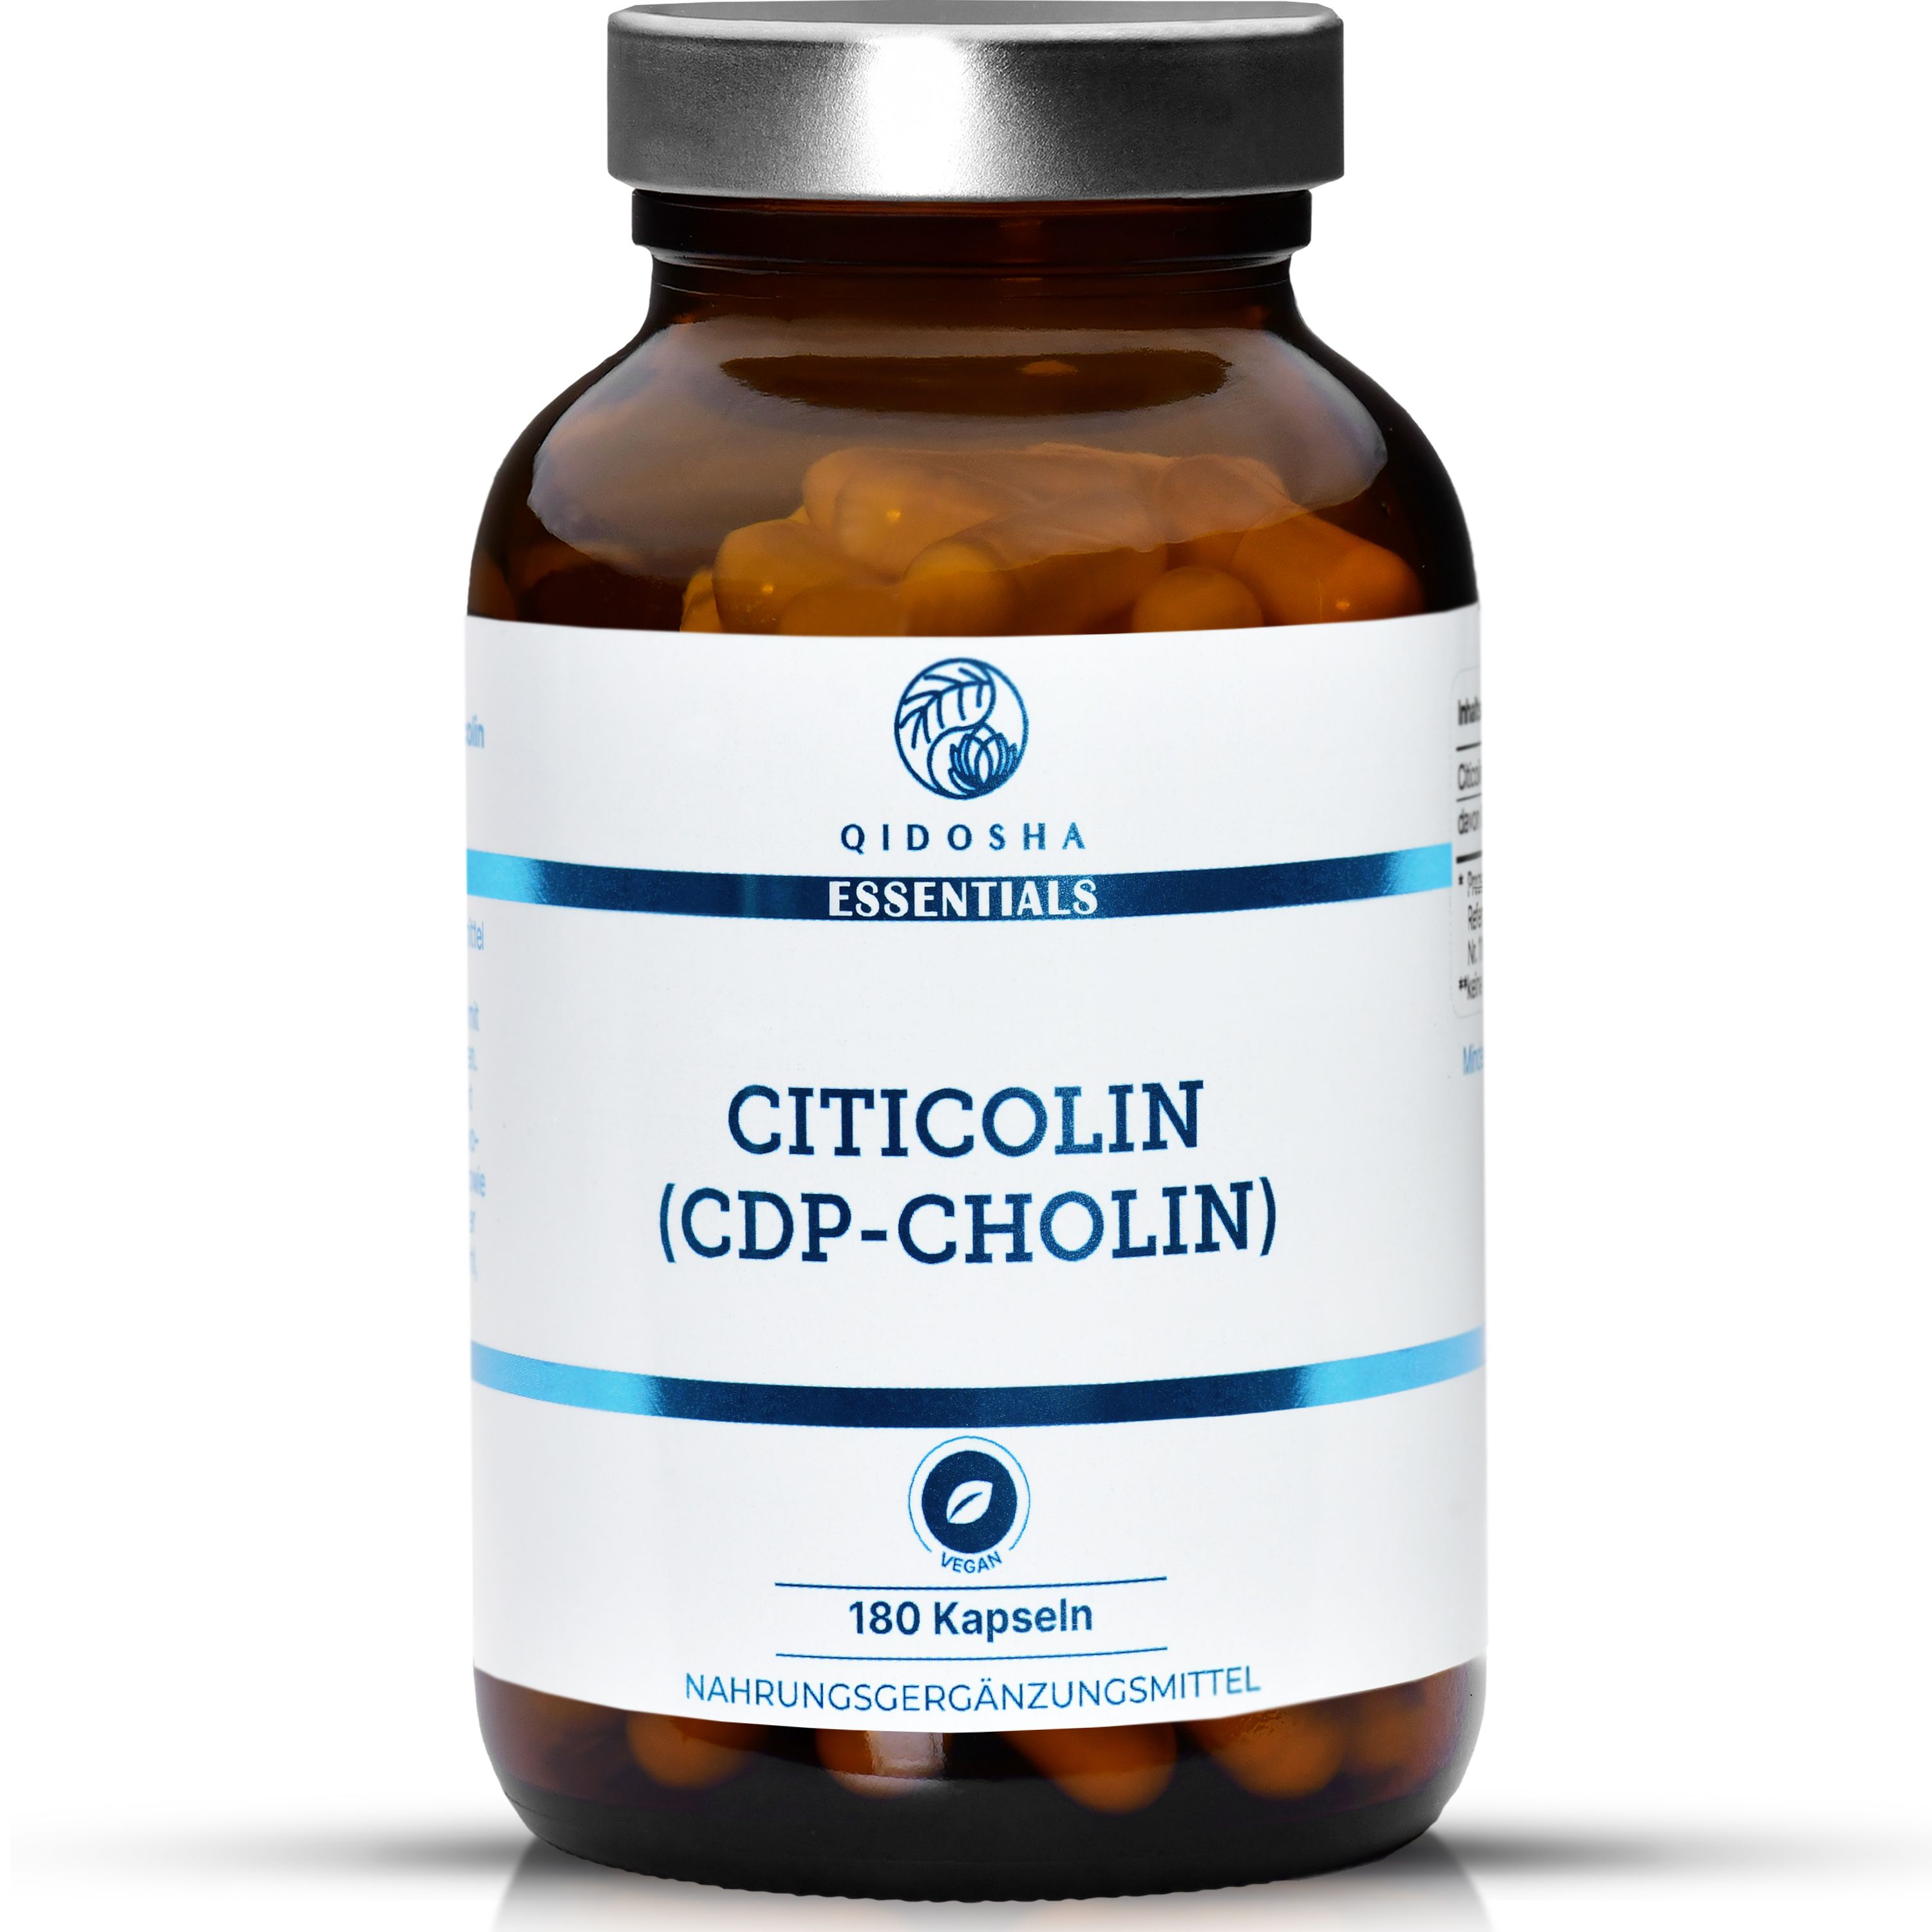 QIDOSHA Citicholin (CDP Cholin)